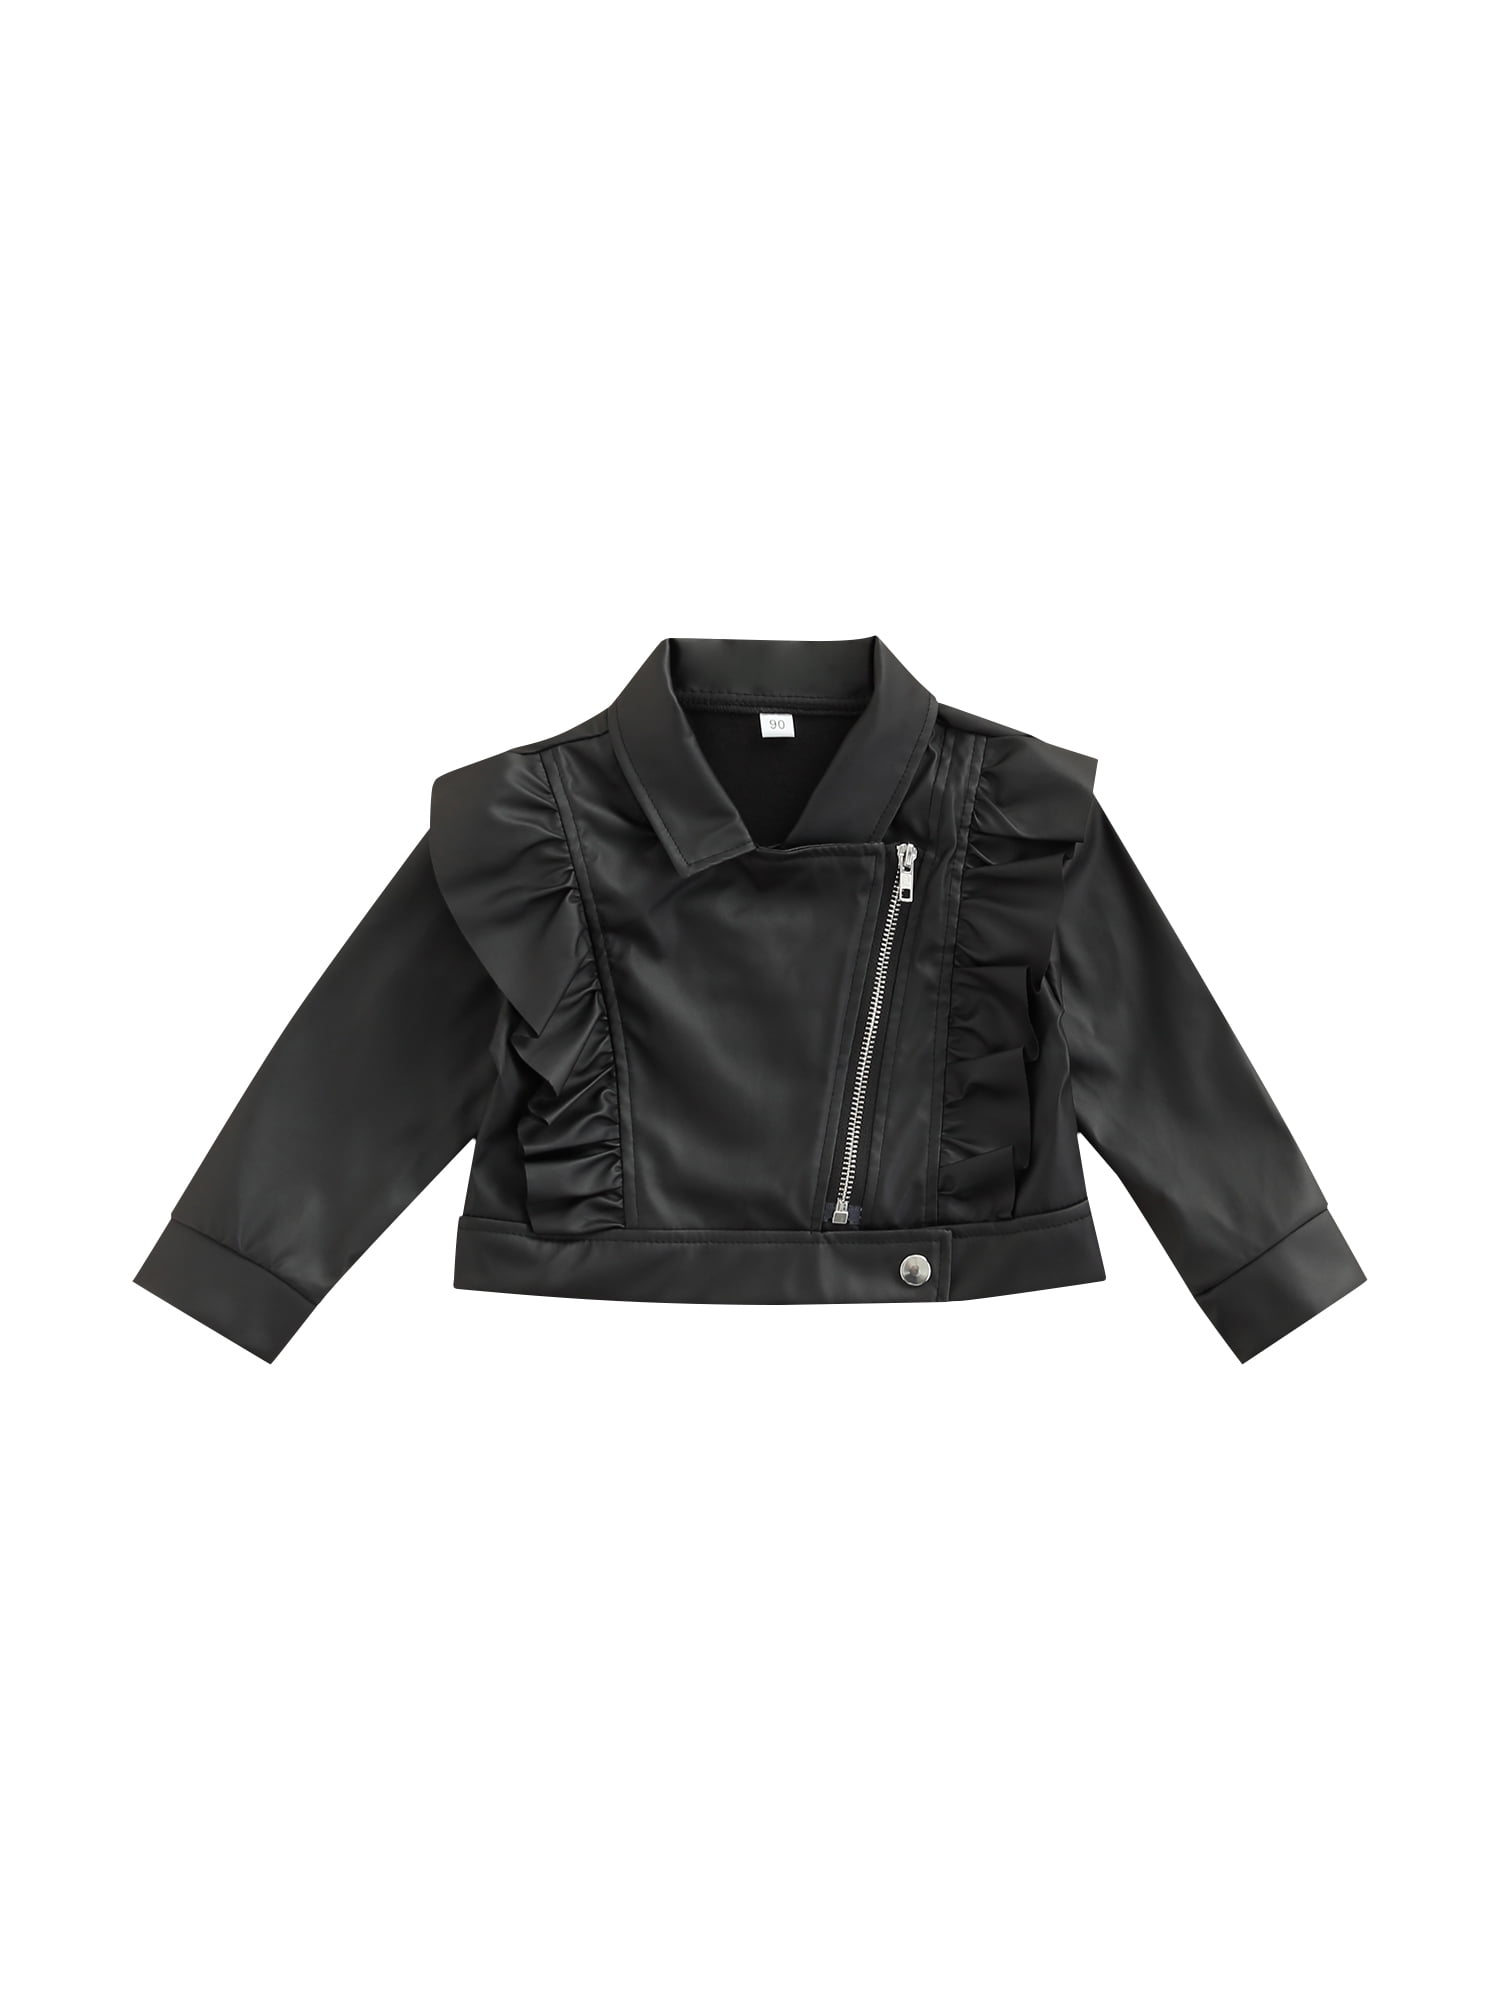 Hot Kids Baby Girls PU Leather Jacket Zipper Coat Especially 2-5 years Old Coat 